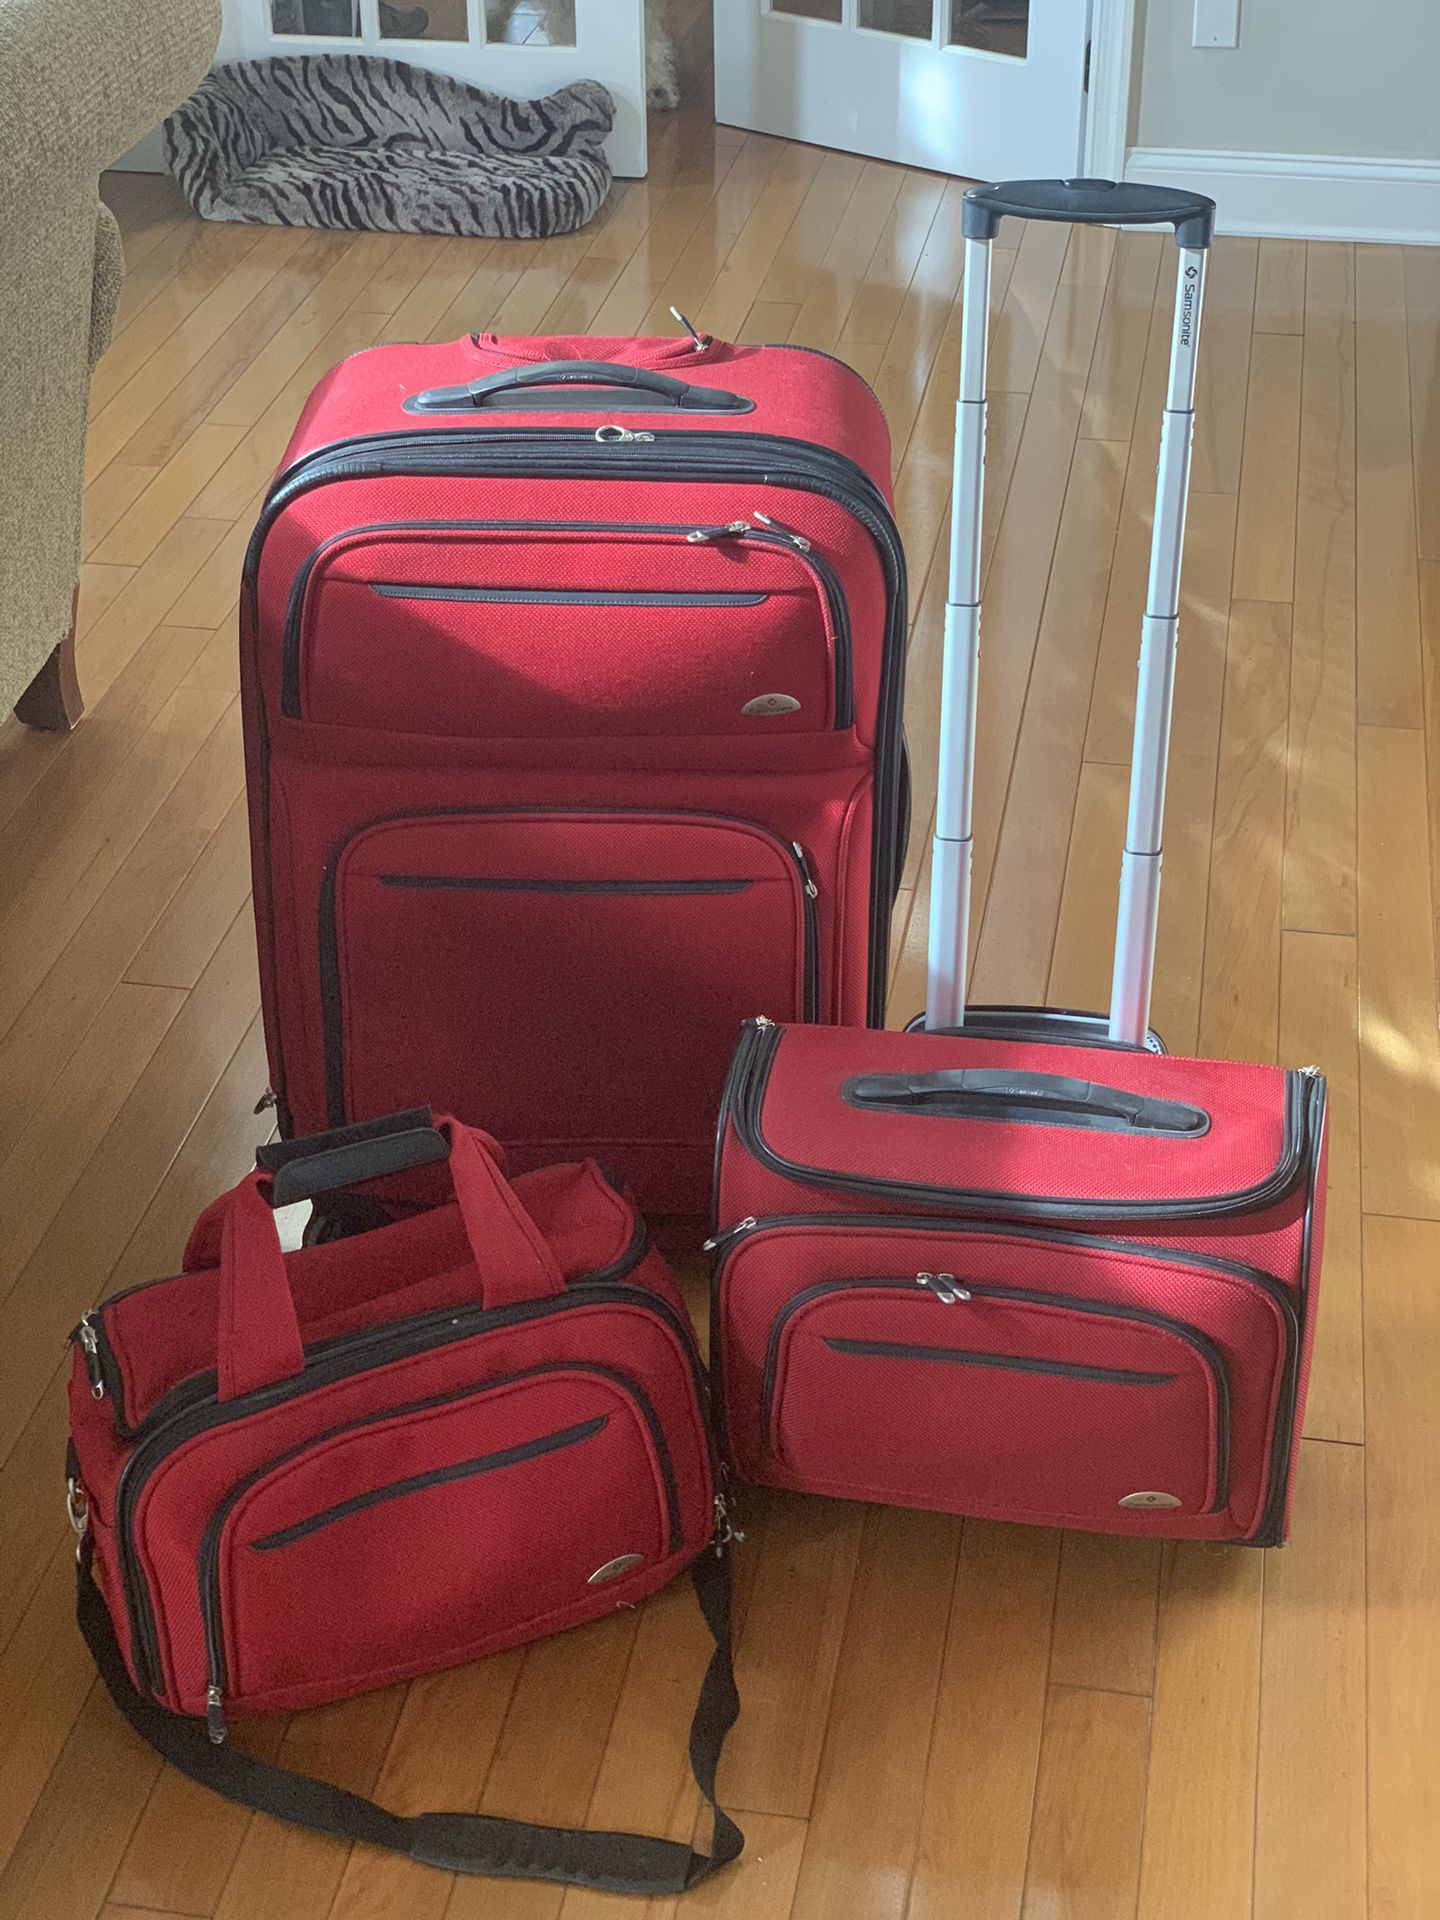 3 Samsonite Luggage and Roller Bag